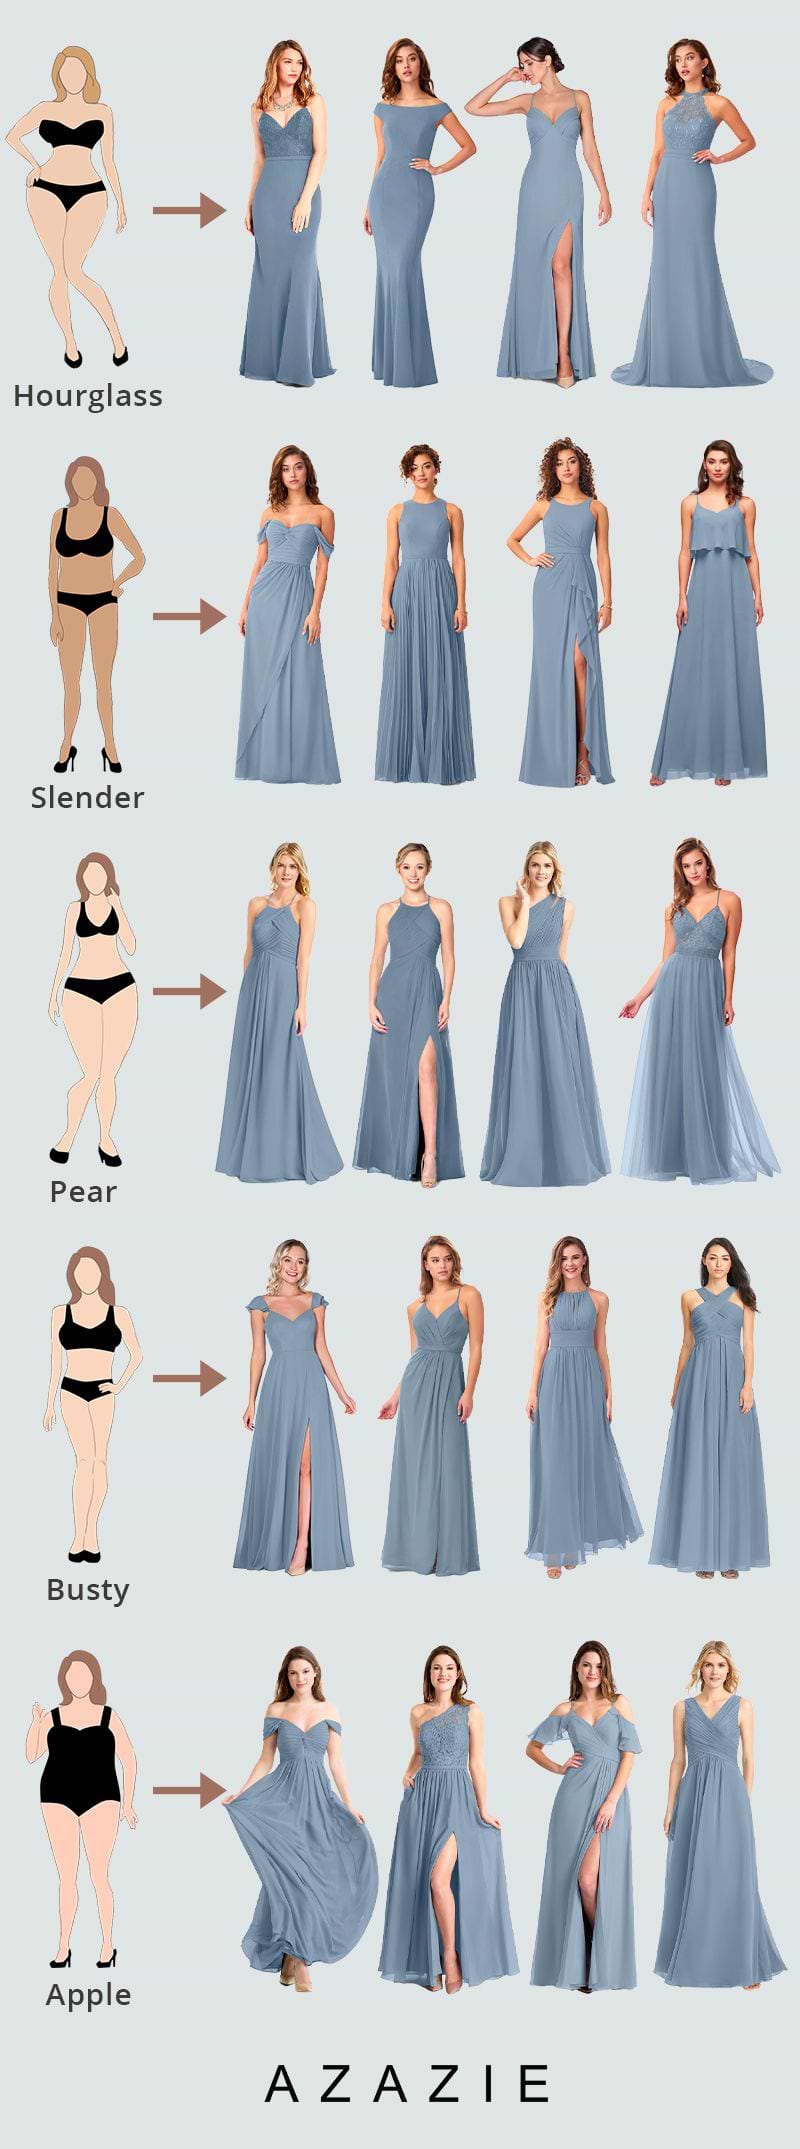 Azazie Bridesmaid Body Guide